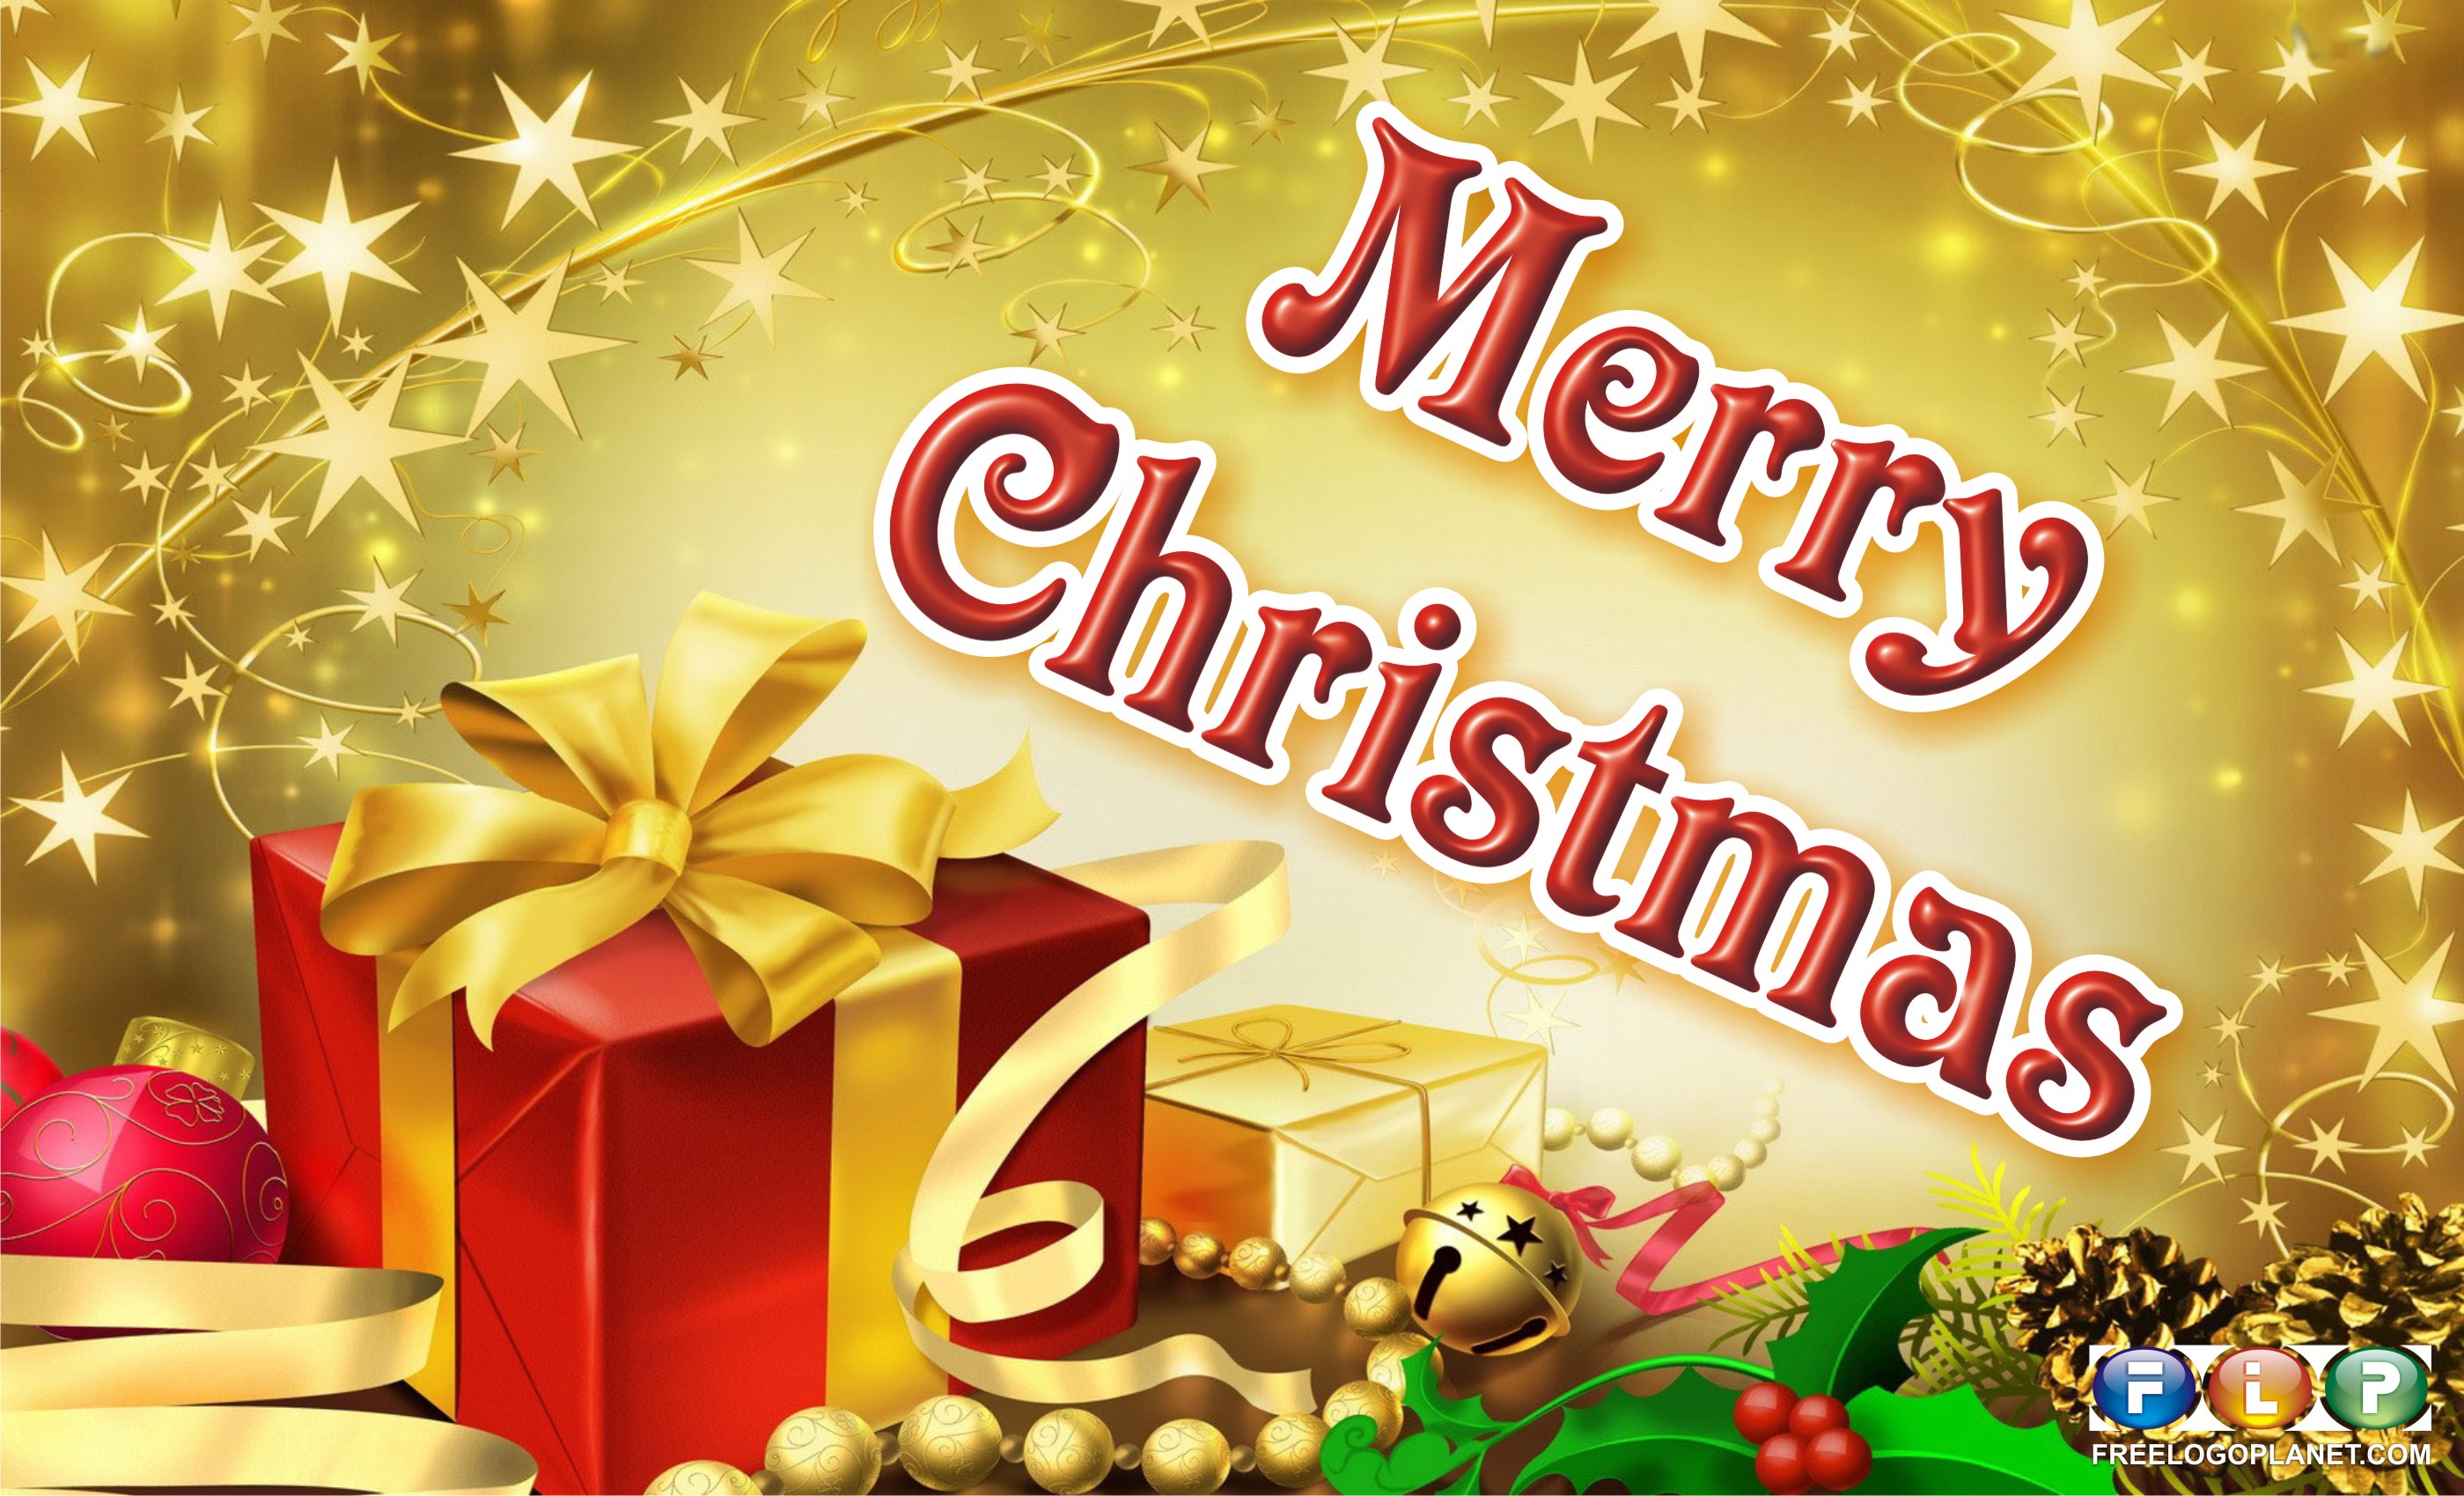 Merry Christmas Wallpapers HD Free Download Best HD Desktop ...